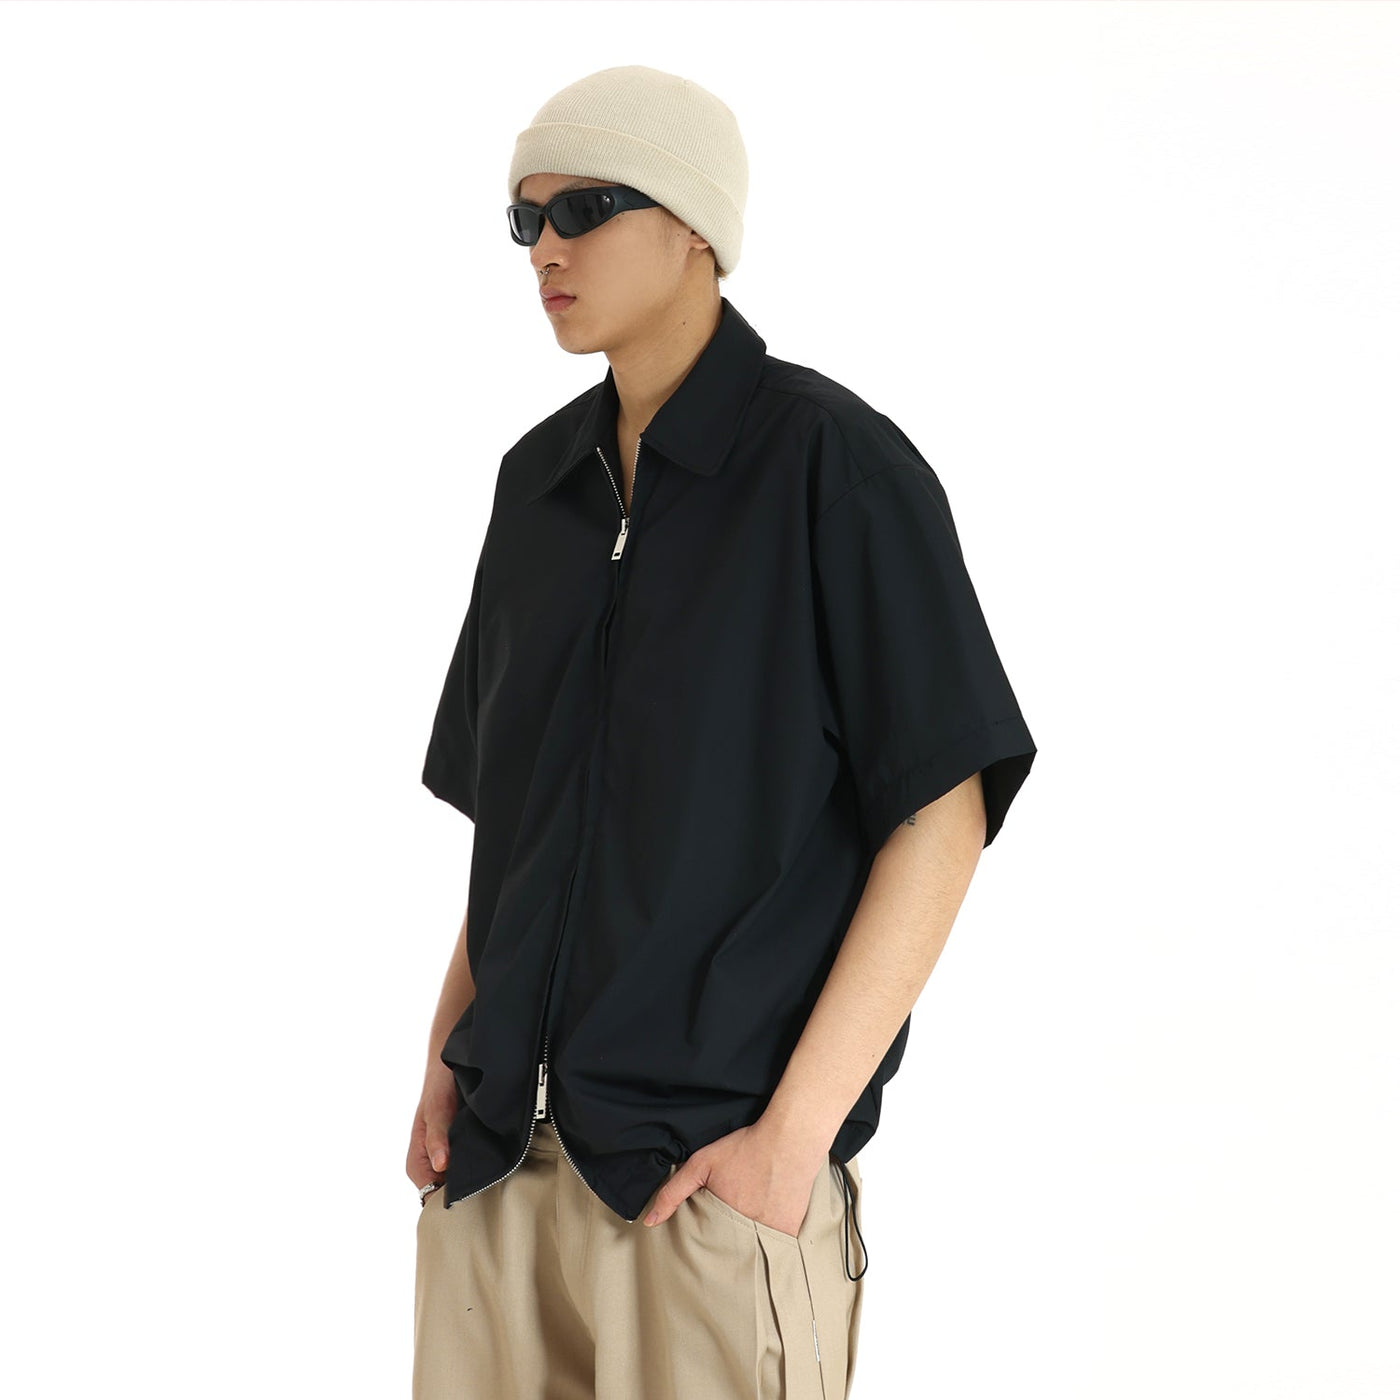 MEBXX Solid Drawstring Hem Zip-Up Shirt Korean Street Fashion Shirt By Made Extreme Shop Online at OH Vault